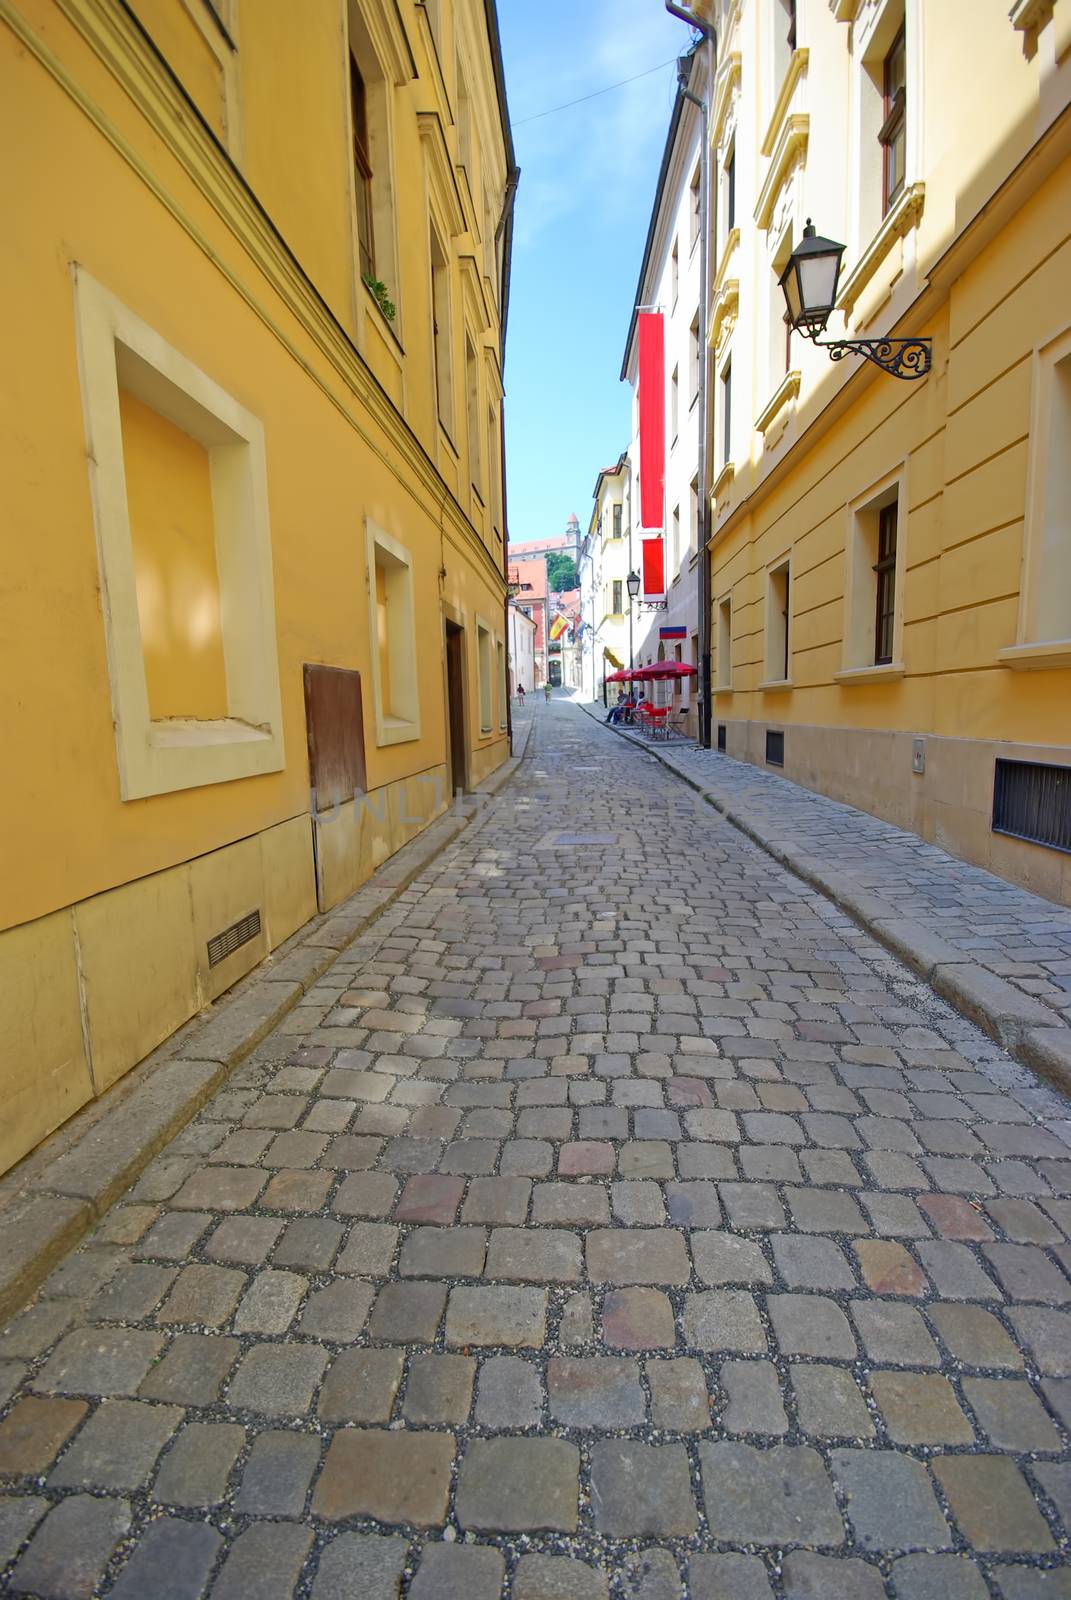 Pavement street in historic center of Bratislava by savcoco